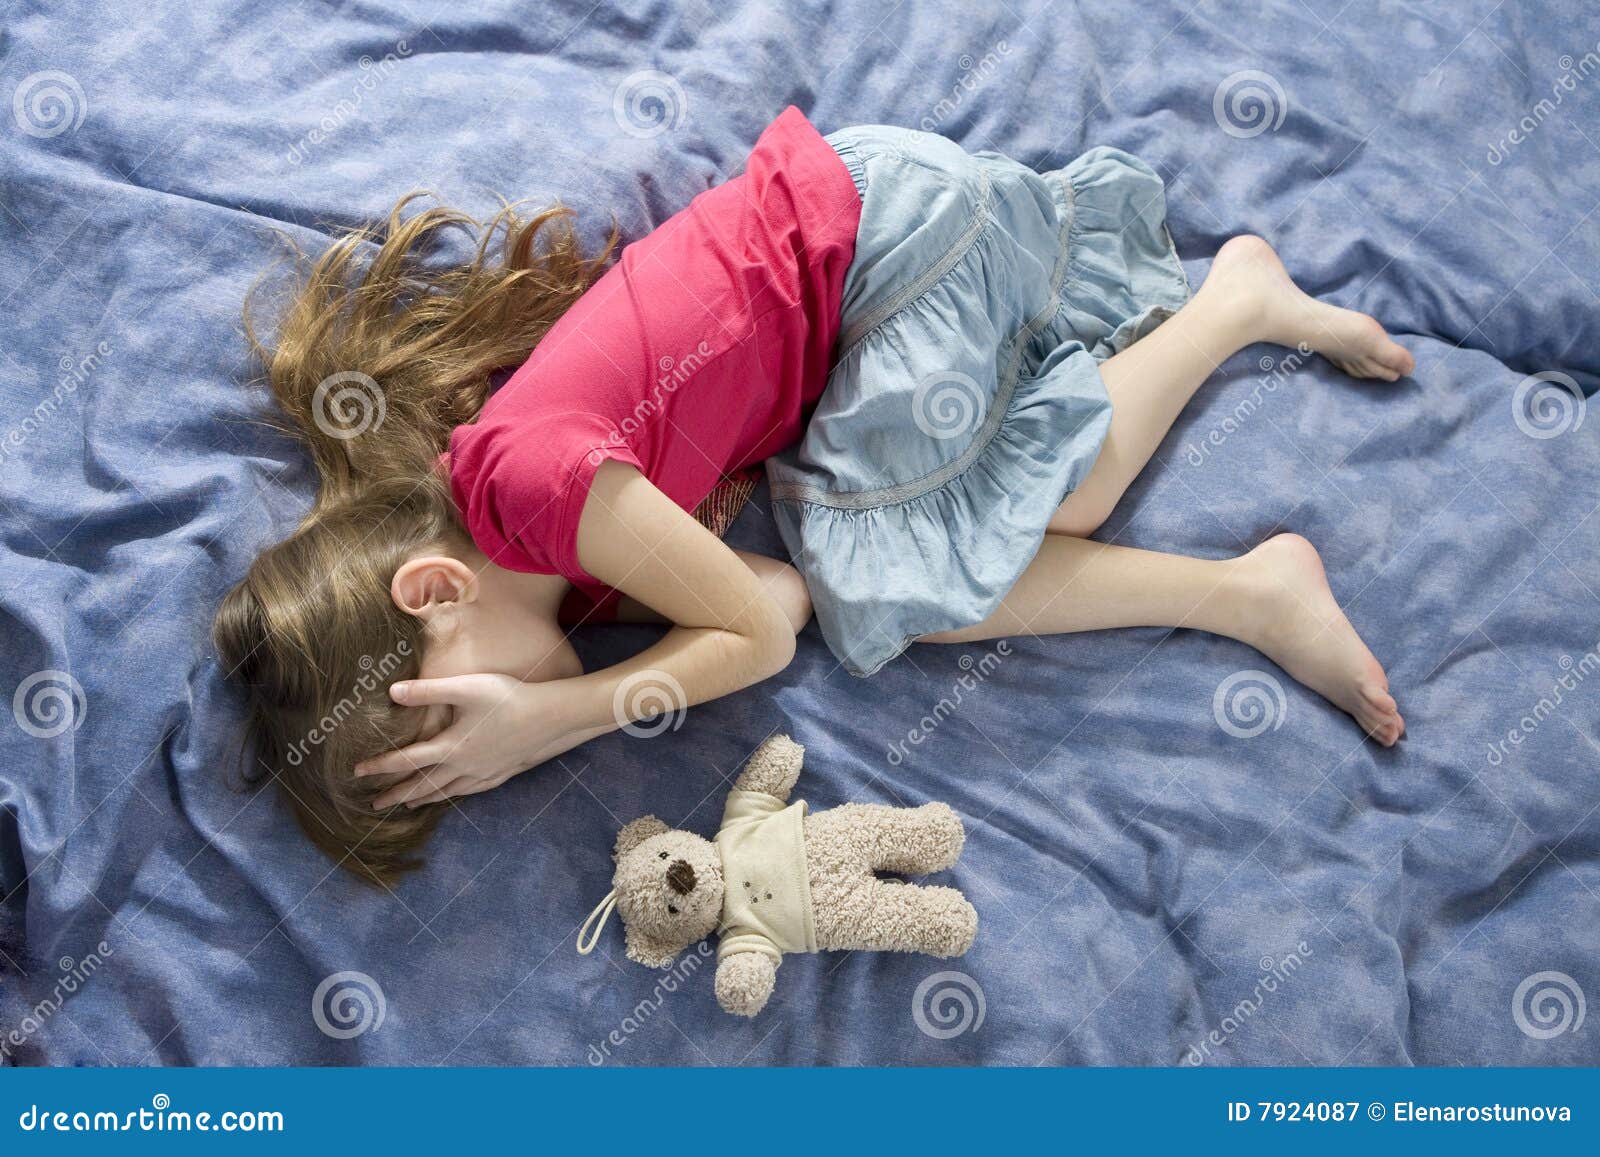 Little Sad Crying Girl with Teddy-bear Stock Image - Image of bear ...